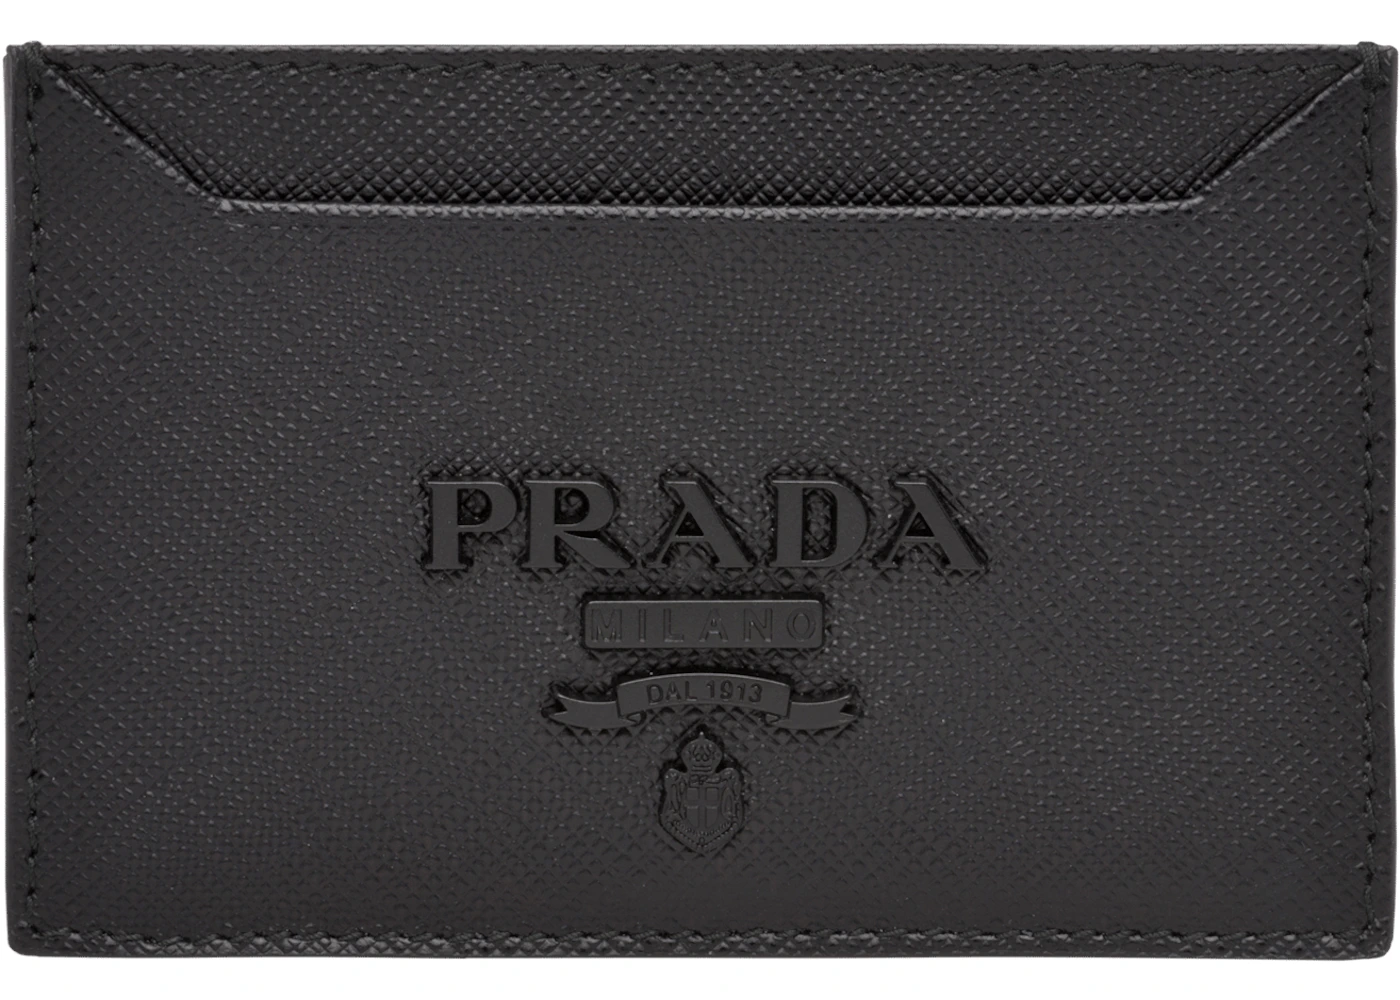 Prada Leather Badge Holder Saffiano NEW in Box